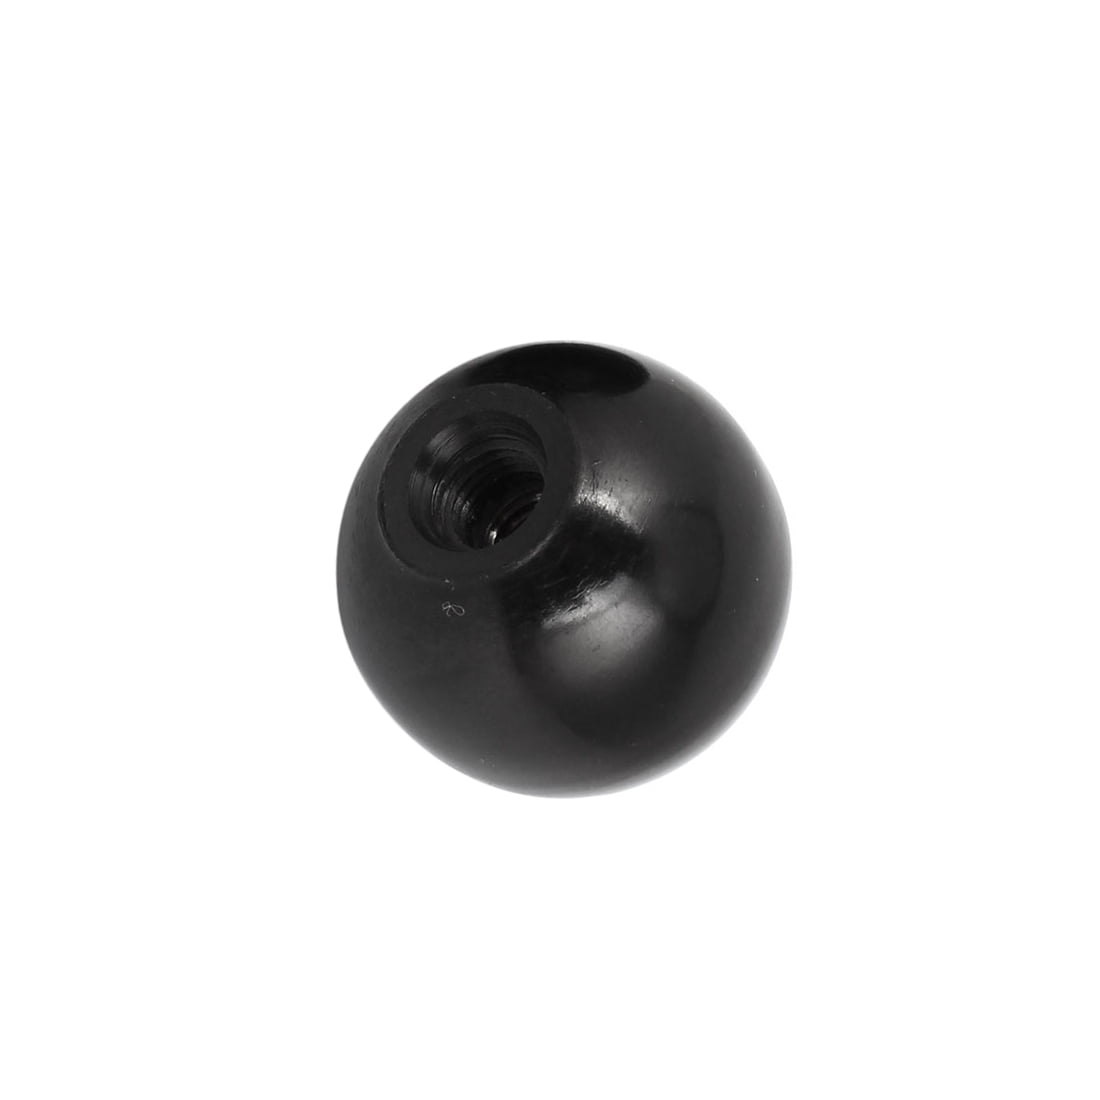 2 Pcs M10 x 28mm Thread Round Plastic 40mm Diameter Ball Shift Knob Black